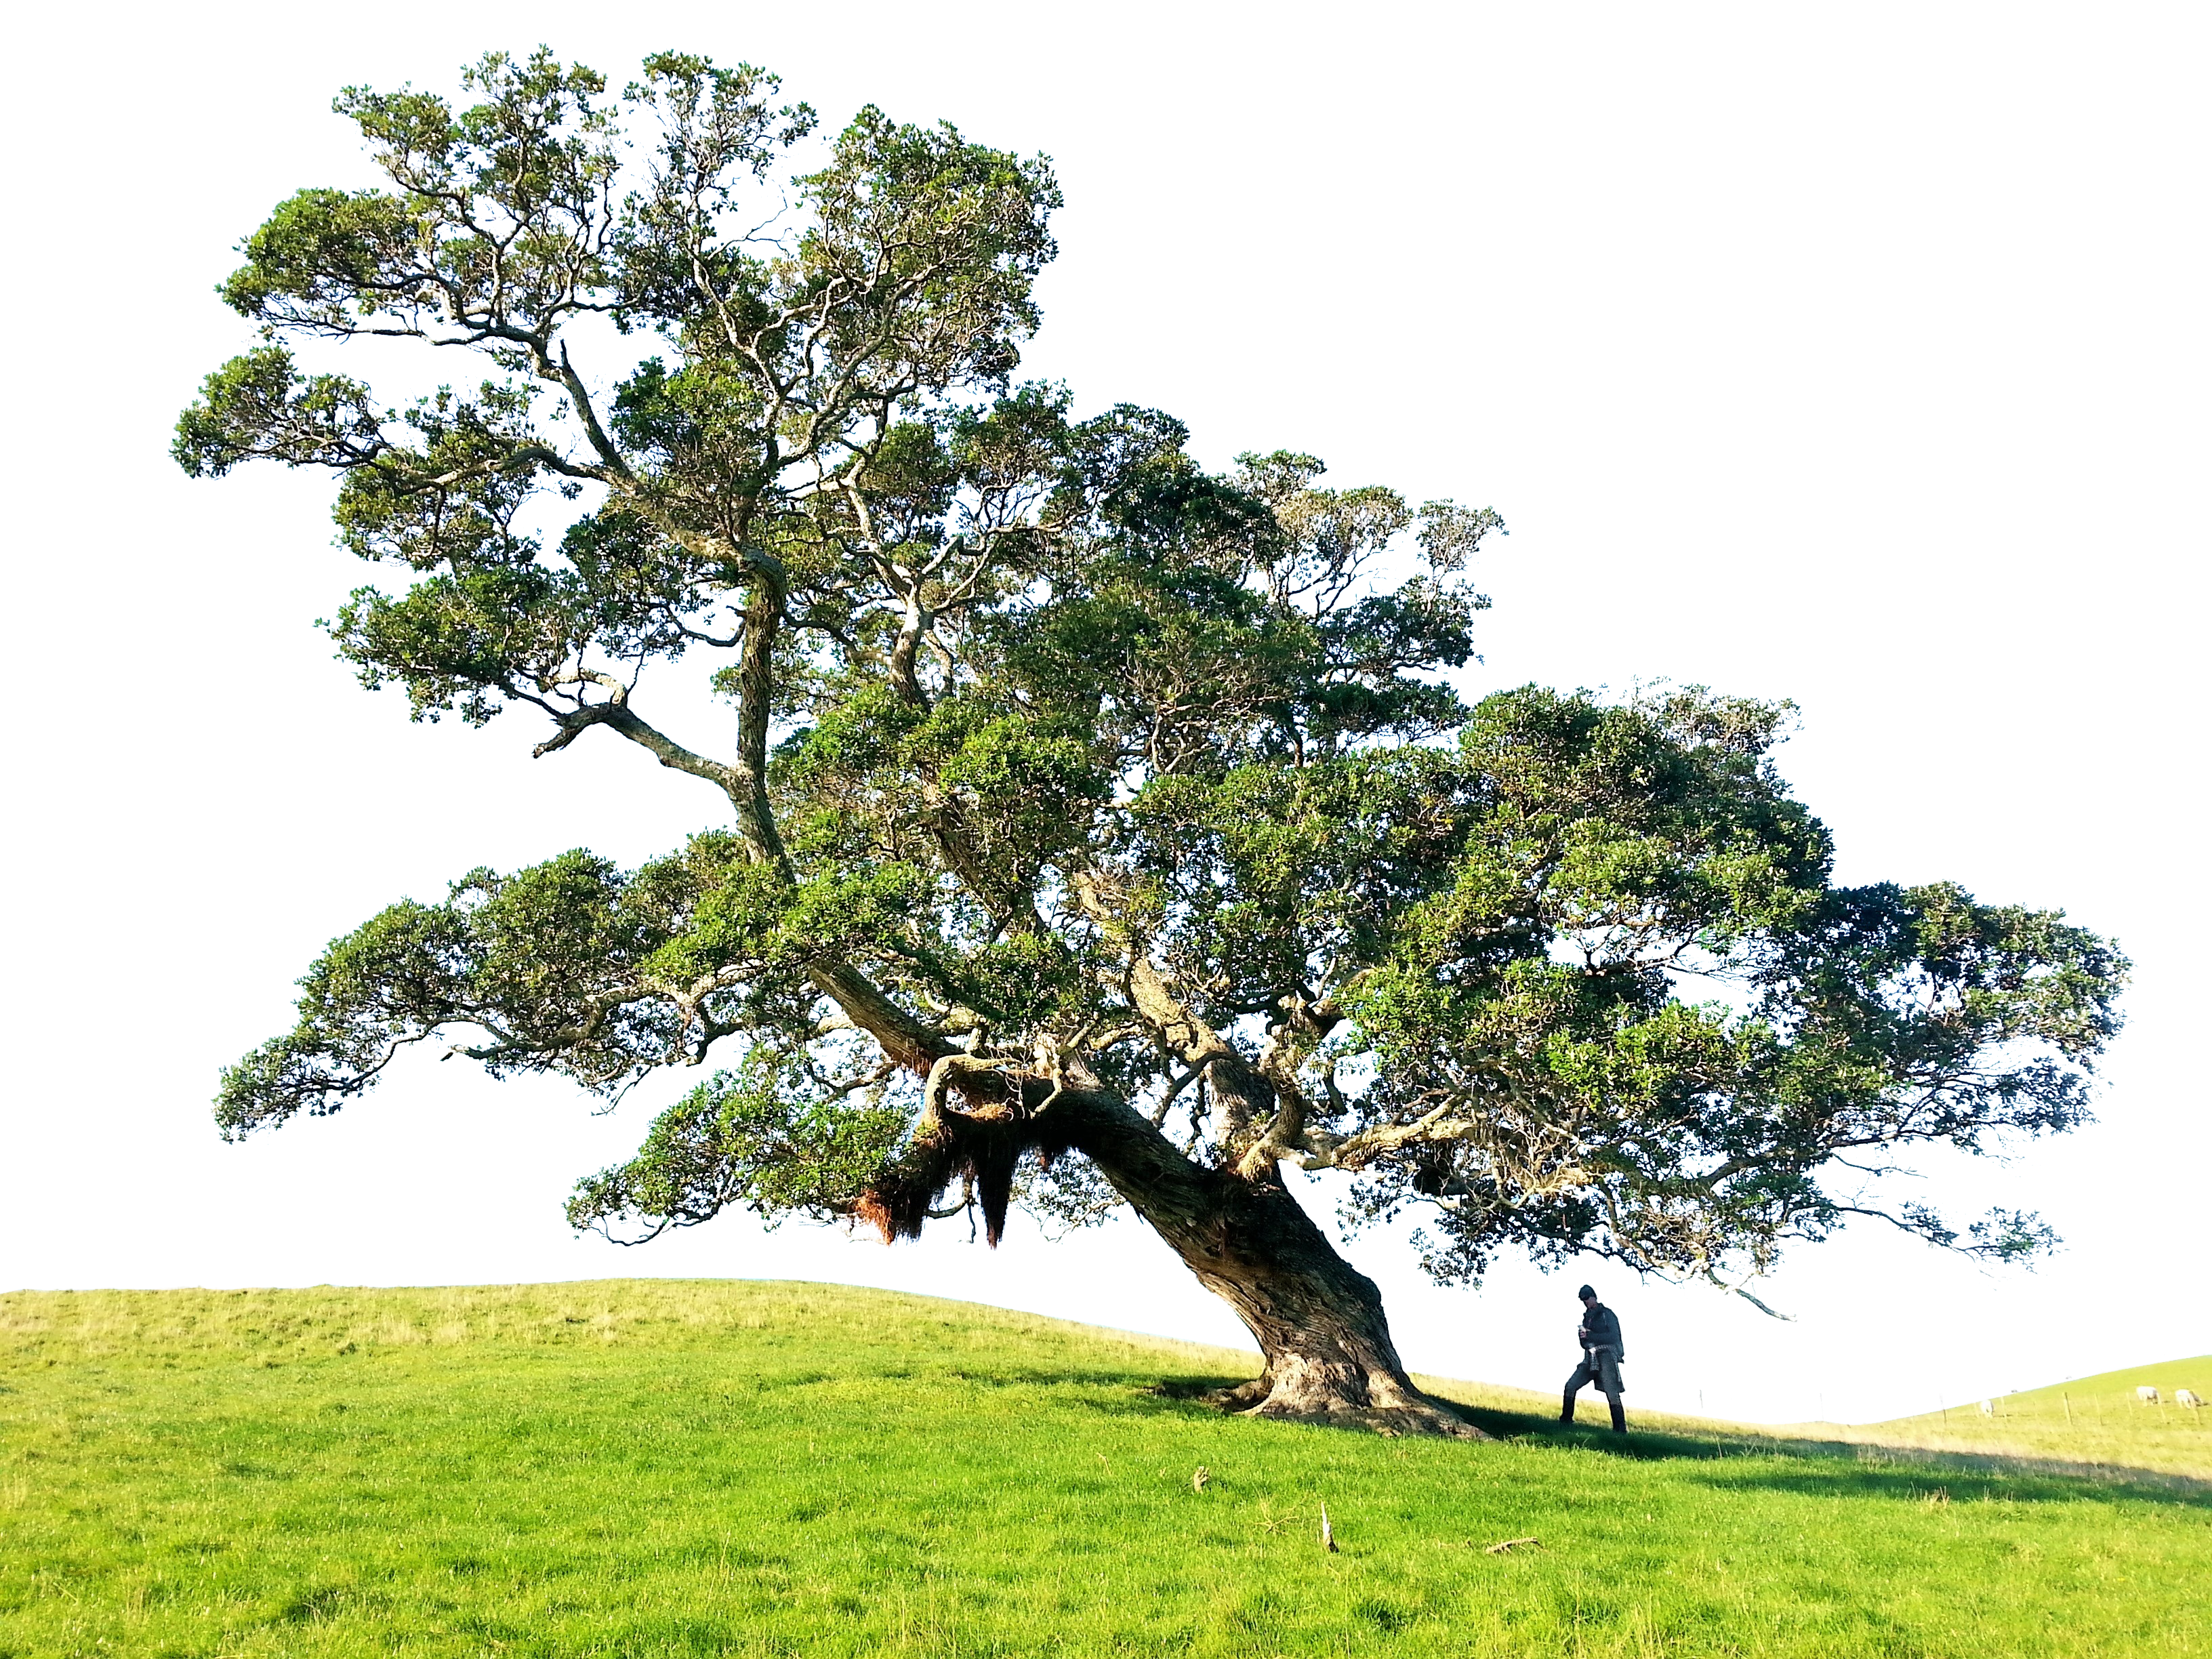 A Tree In A Grassy Field